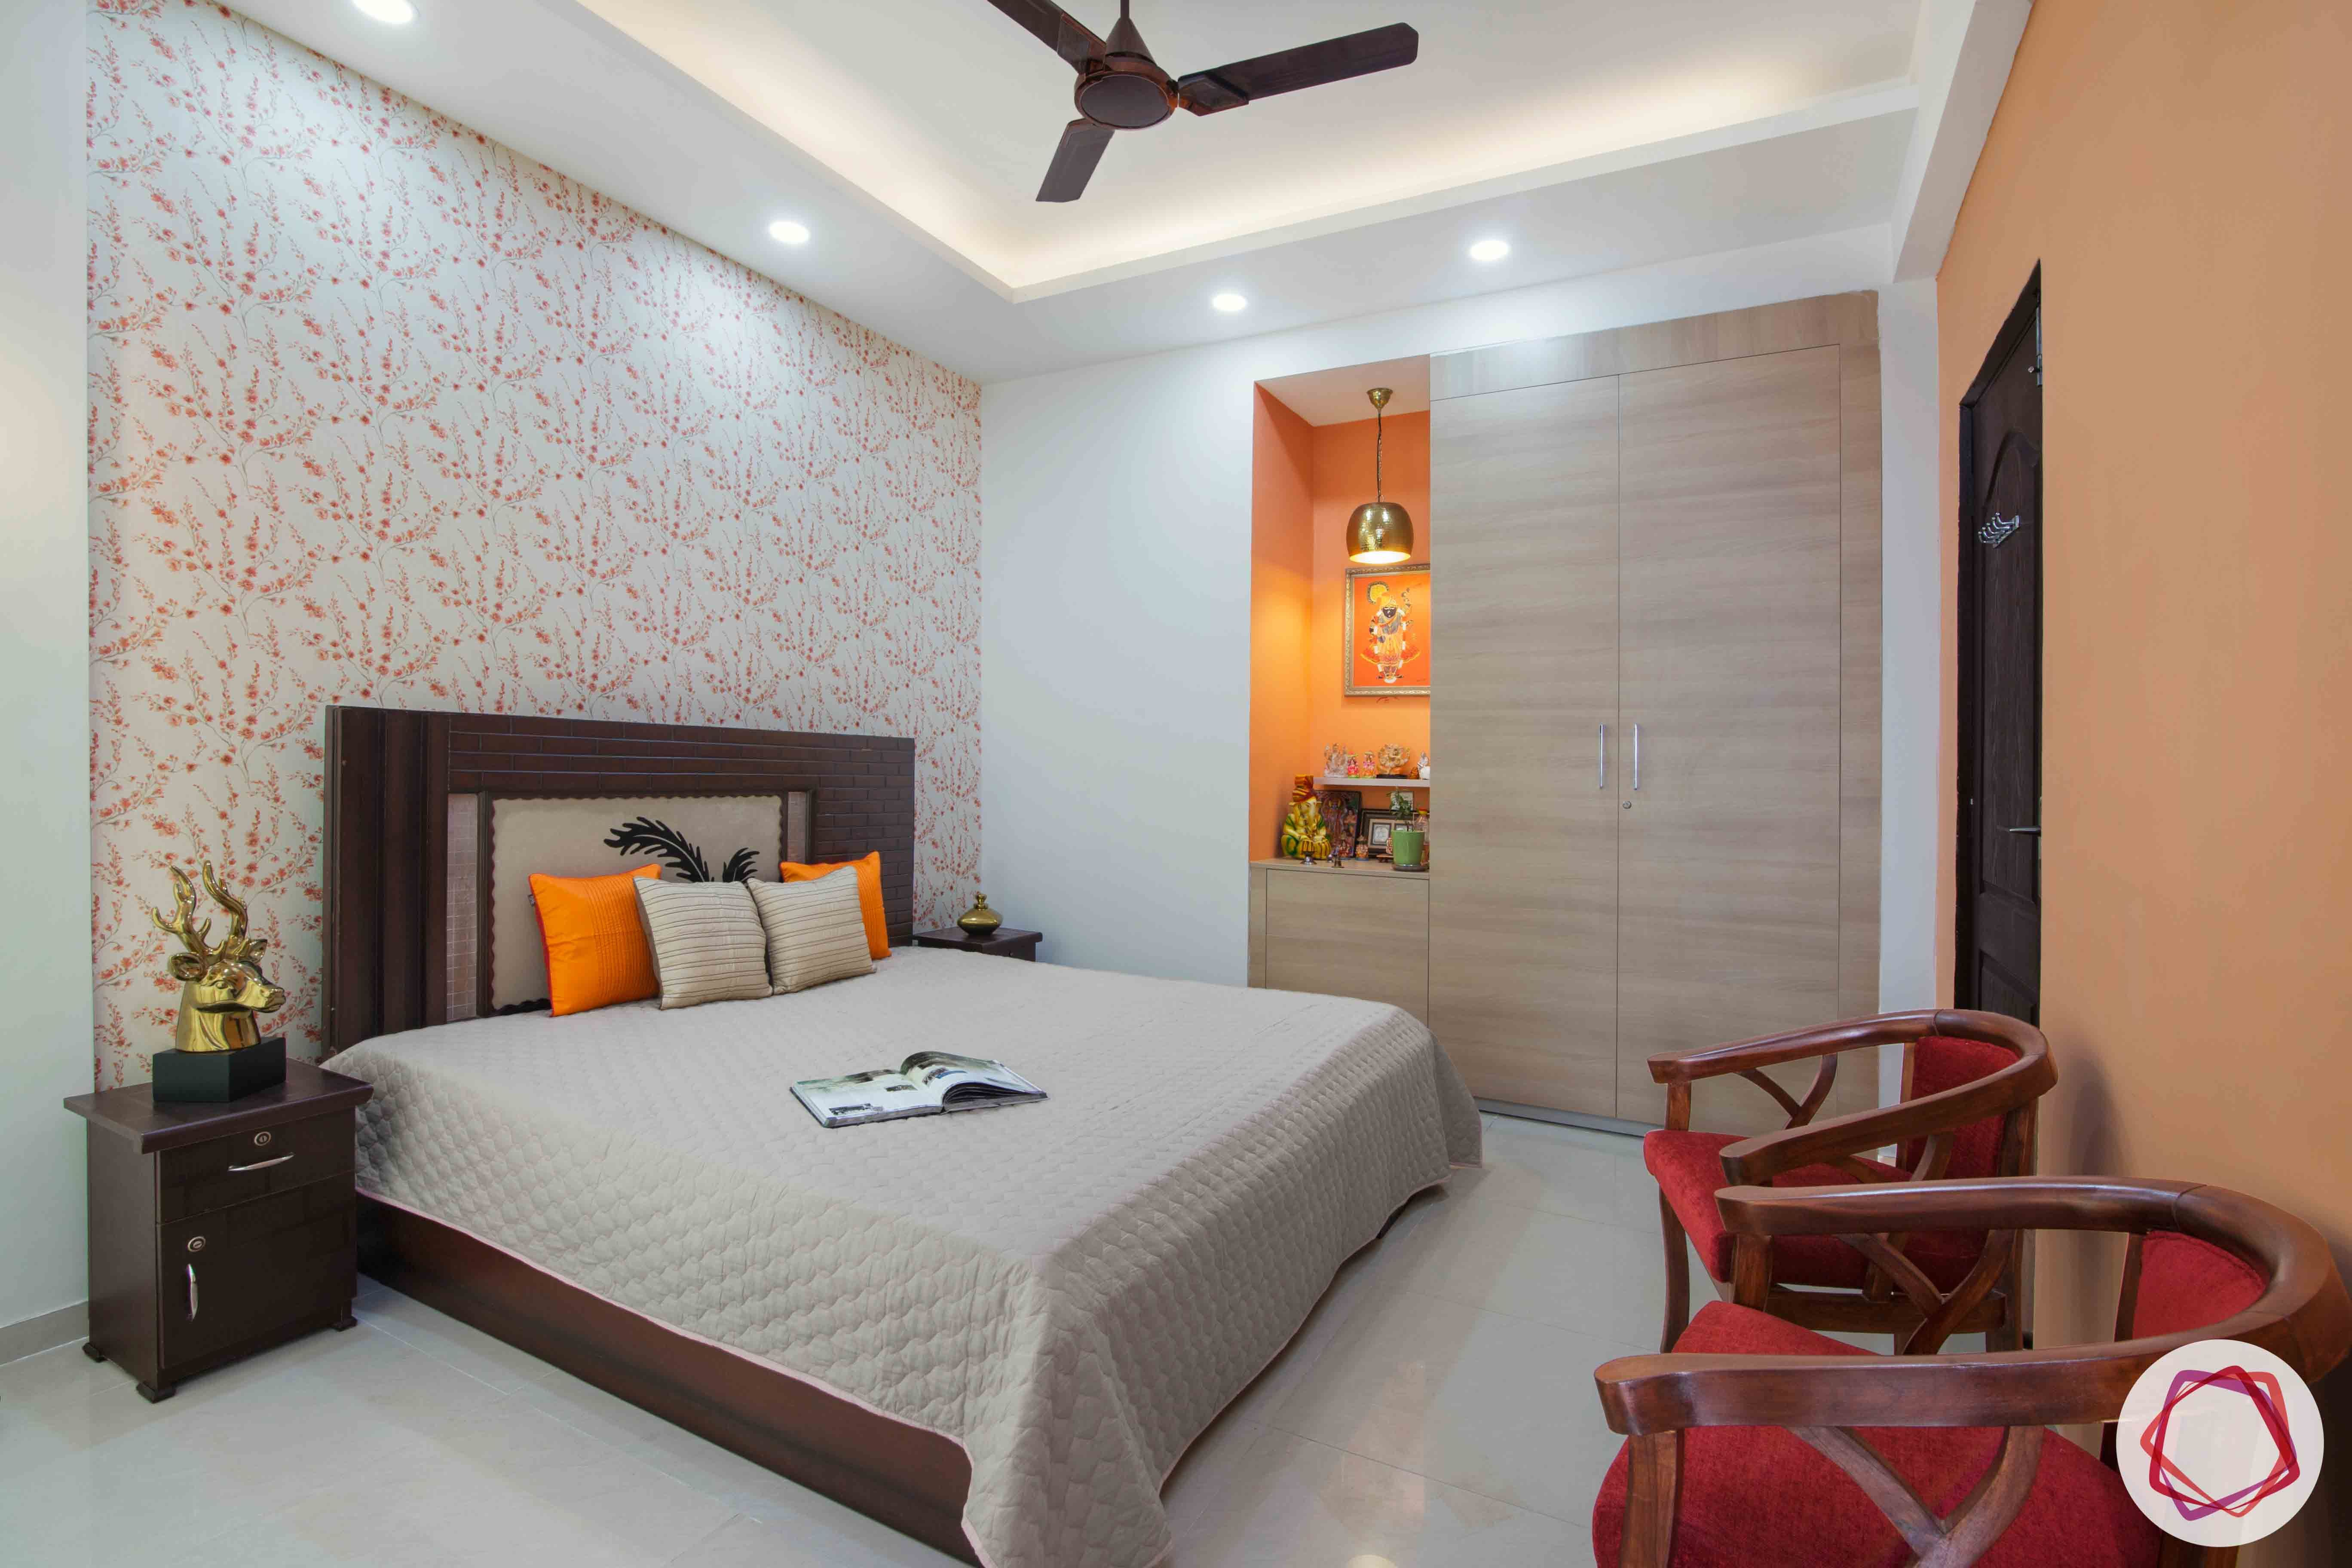 3bhk flat interior design-floral wallpaper designs-orange accent wall